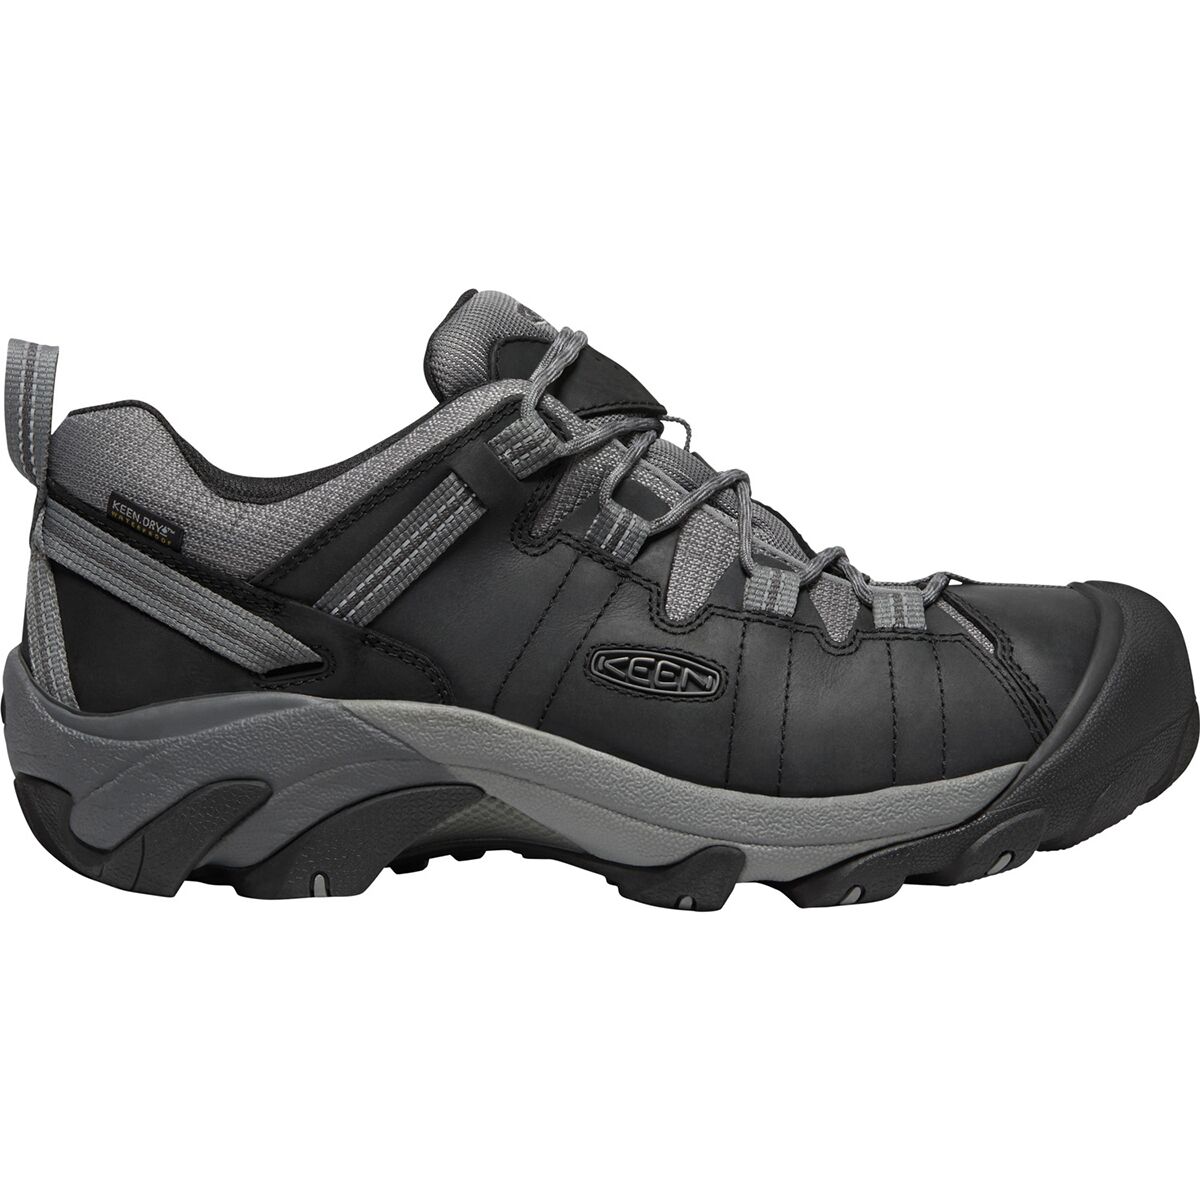 KEEN Targhee ll Waterproof Hiking Shoe - Men's Black/Steel Grey 10.0